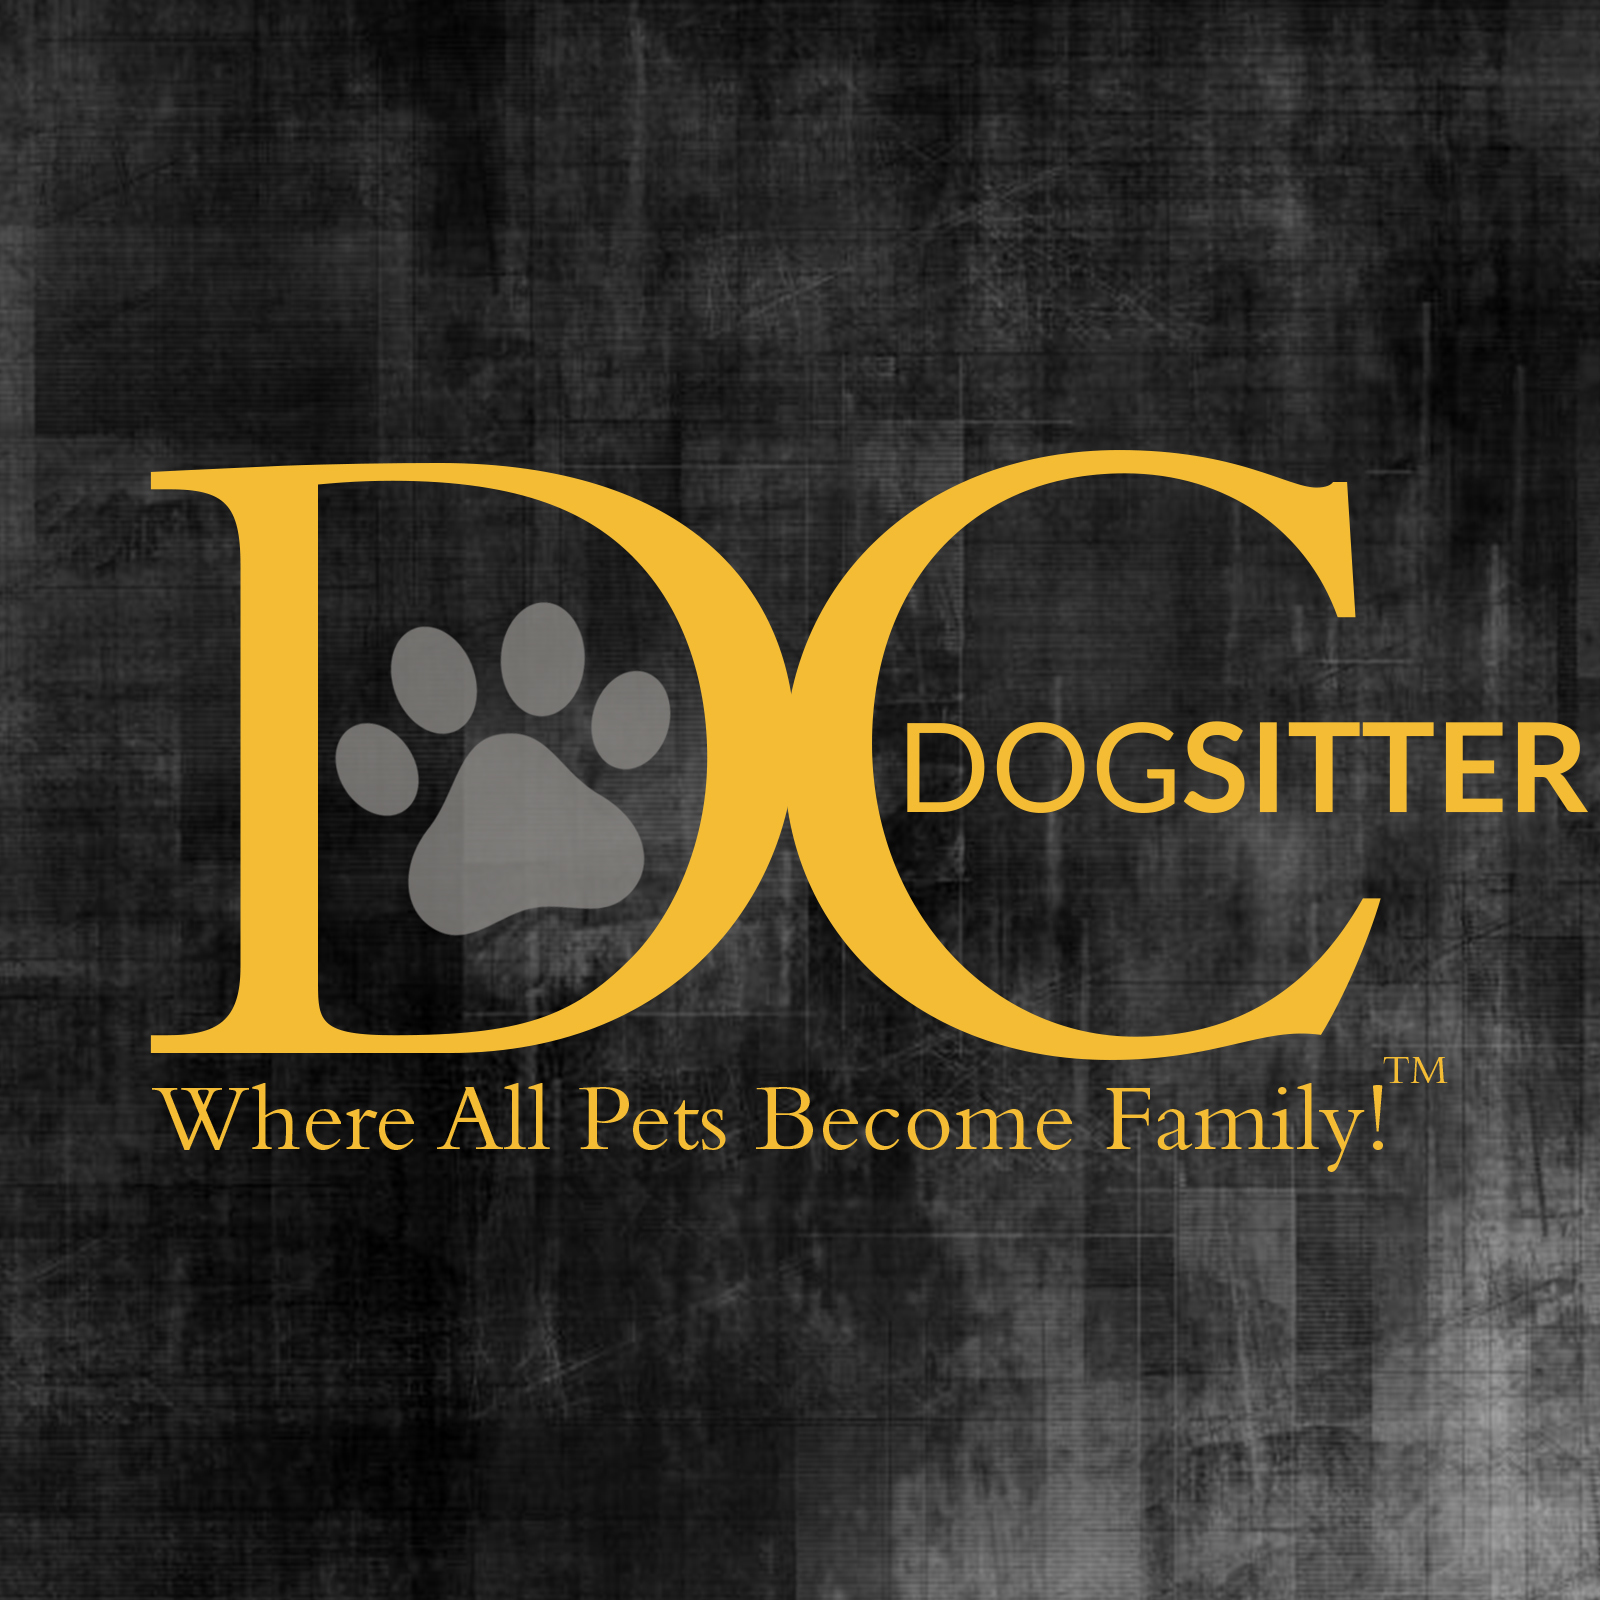 DC Dog Sitter Logo